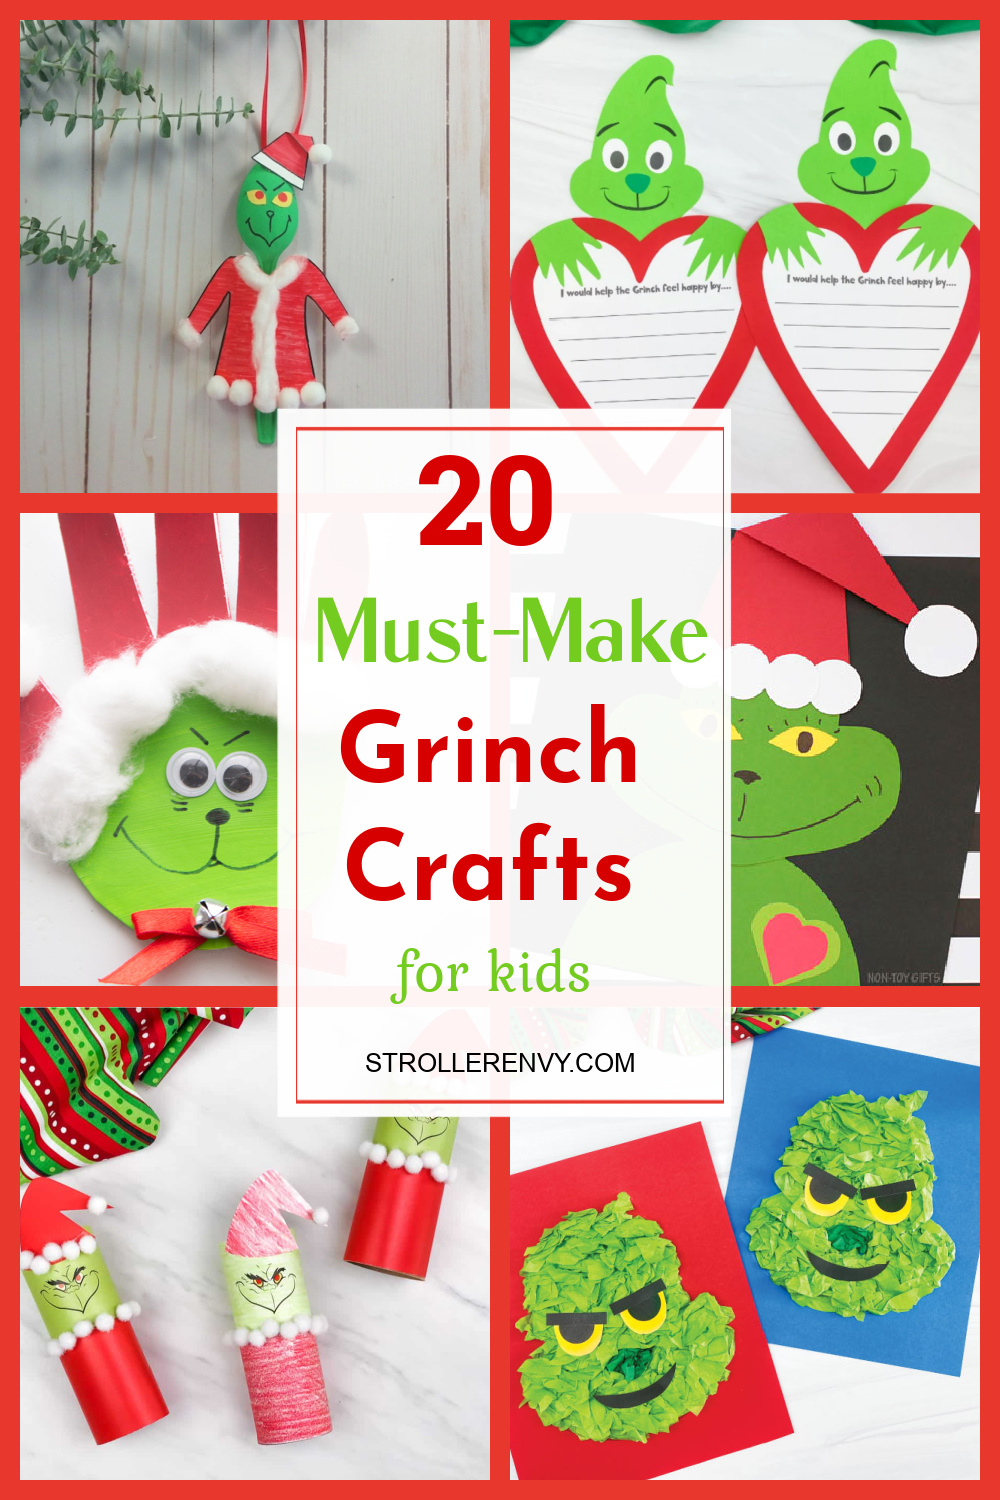 Grinch Crafts for Kids